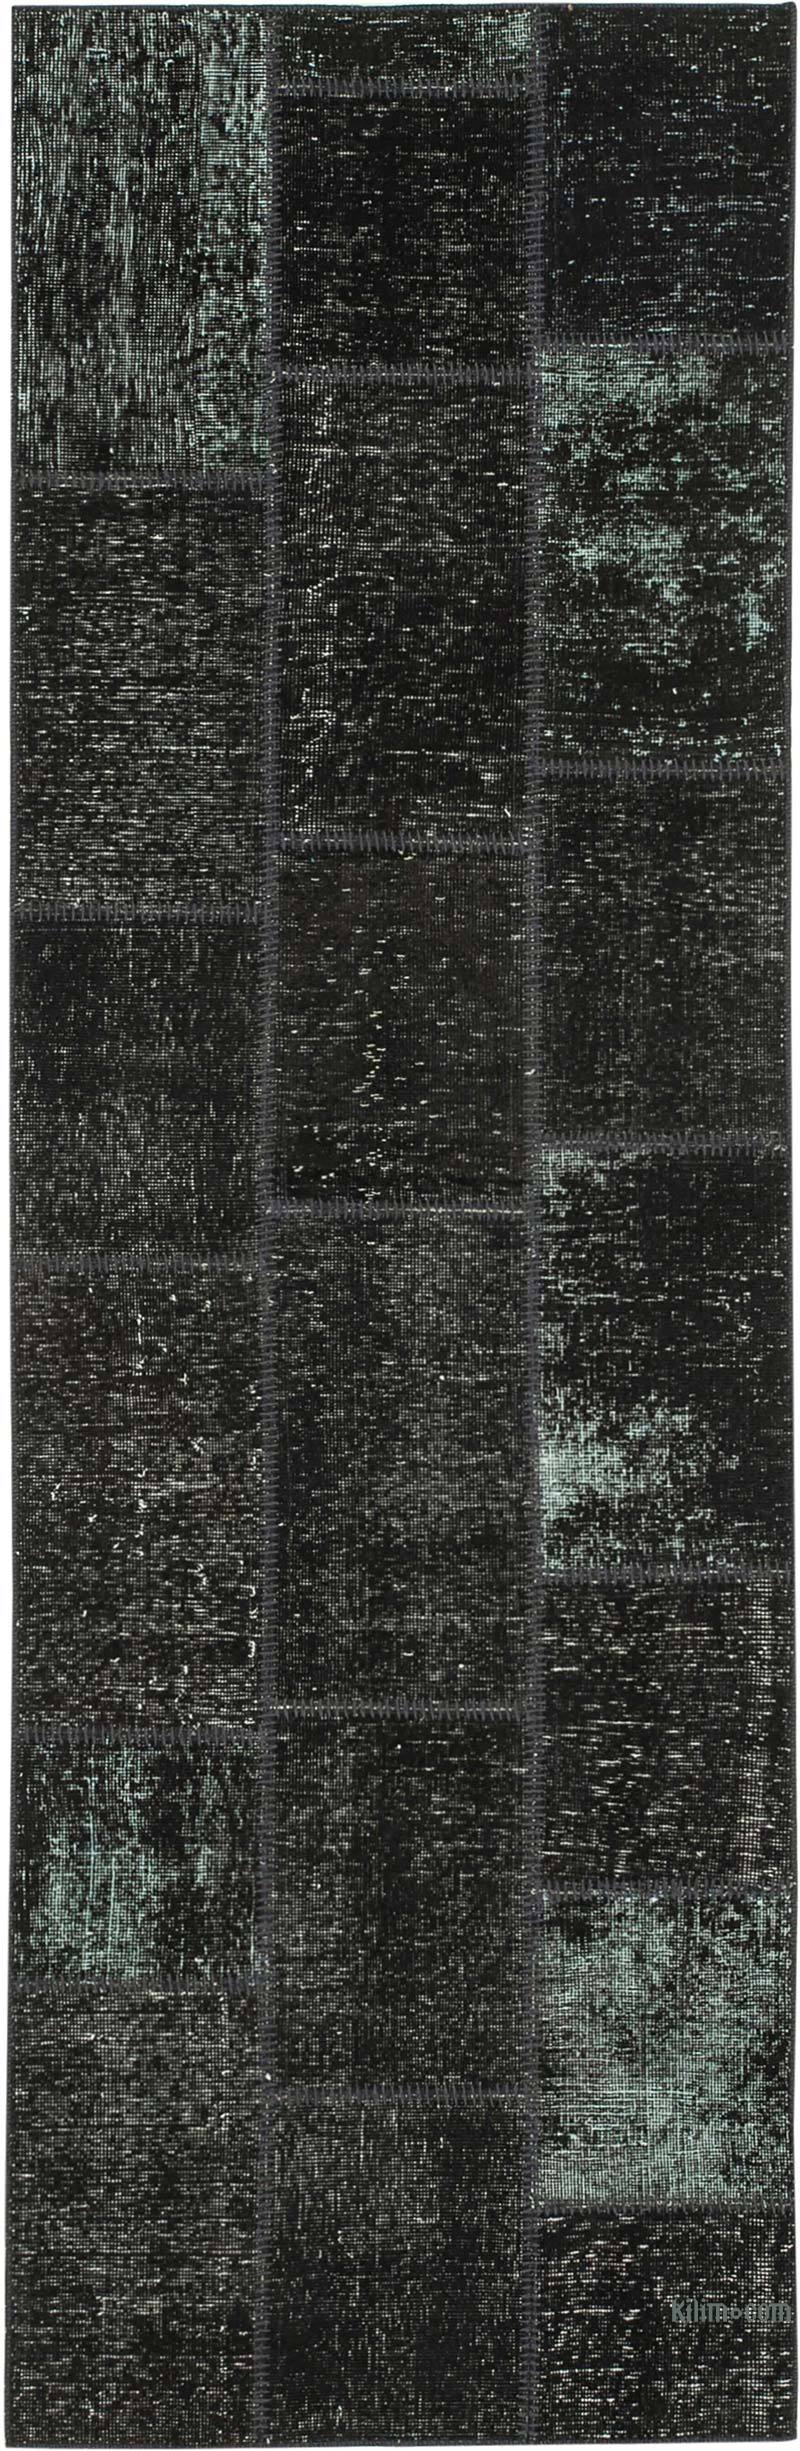 Negro Alfombra De Retazos Turca Sobre-teñida - 87 cm x 268 cm - K0053885